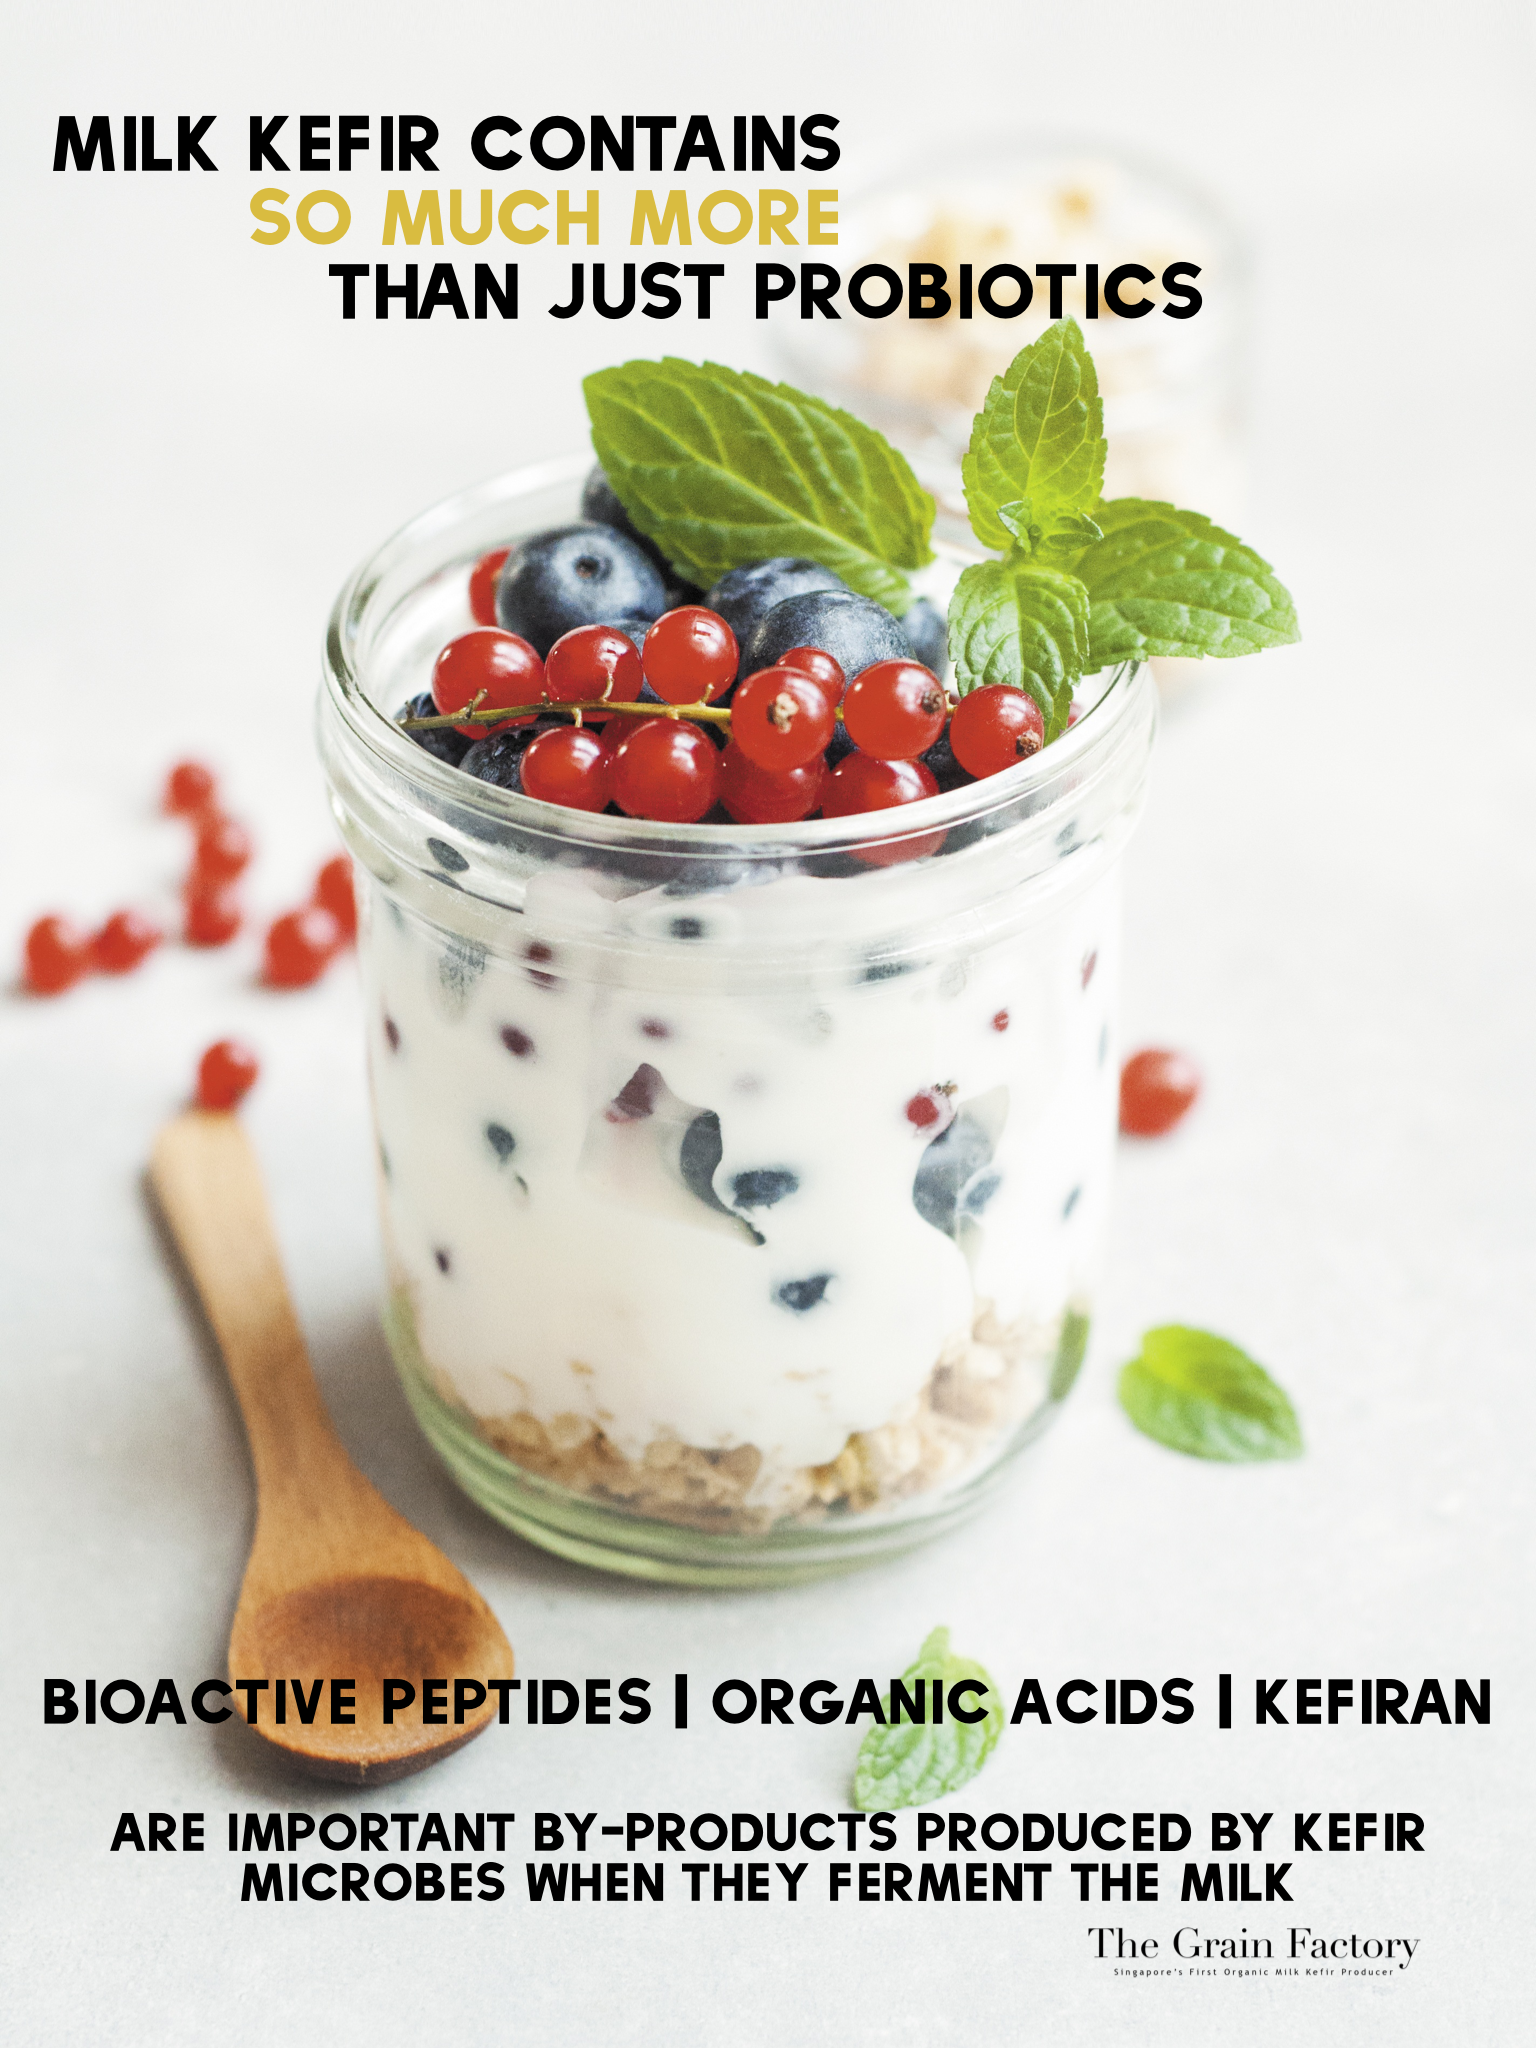 Our Artisanal Milk Kefir - Not just a regular probiotic drink